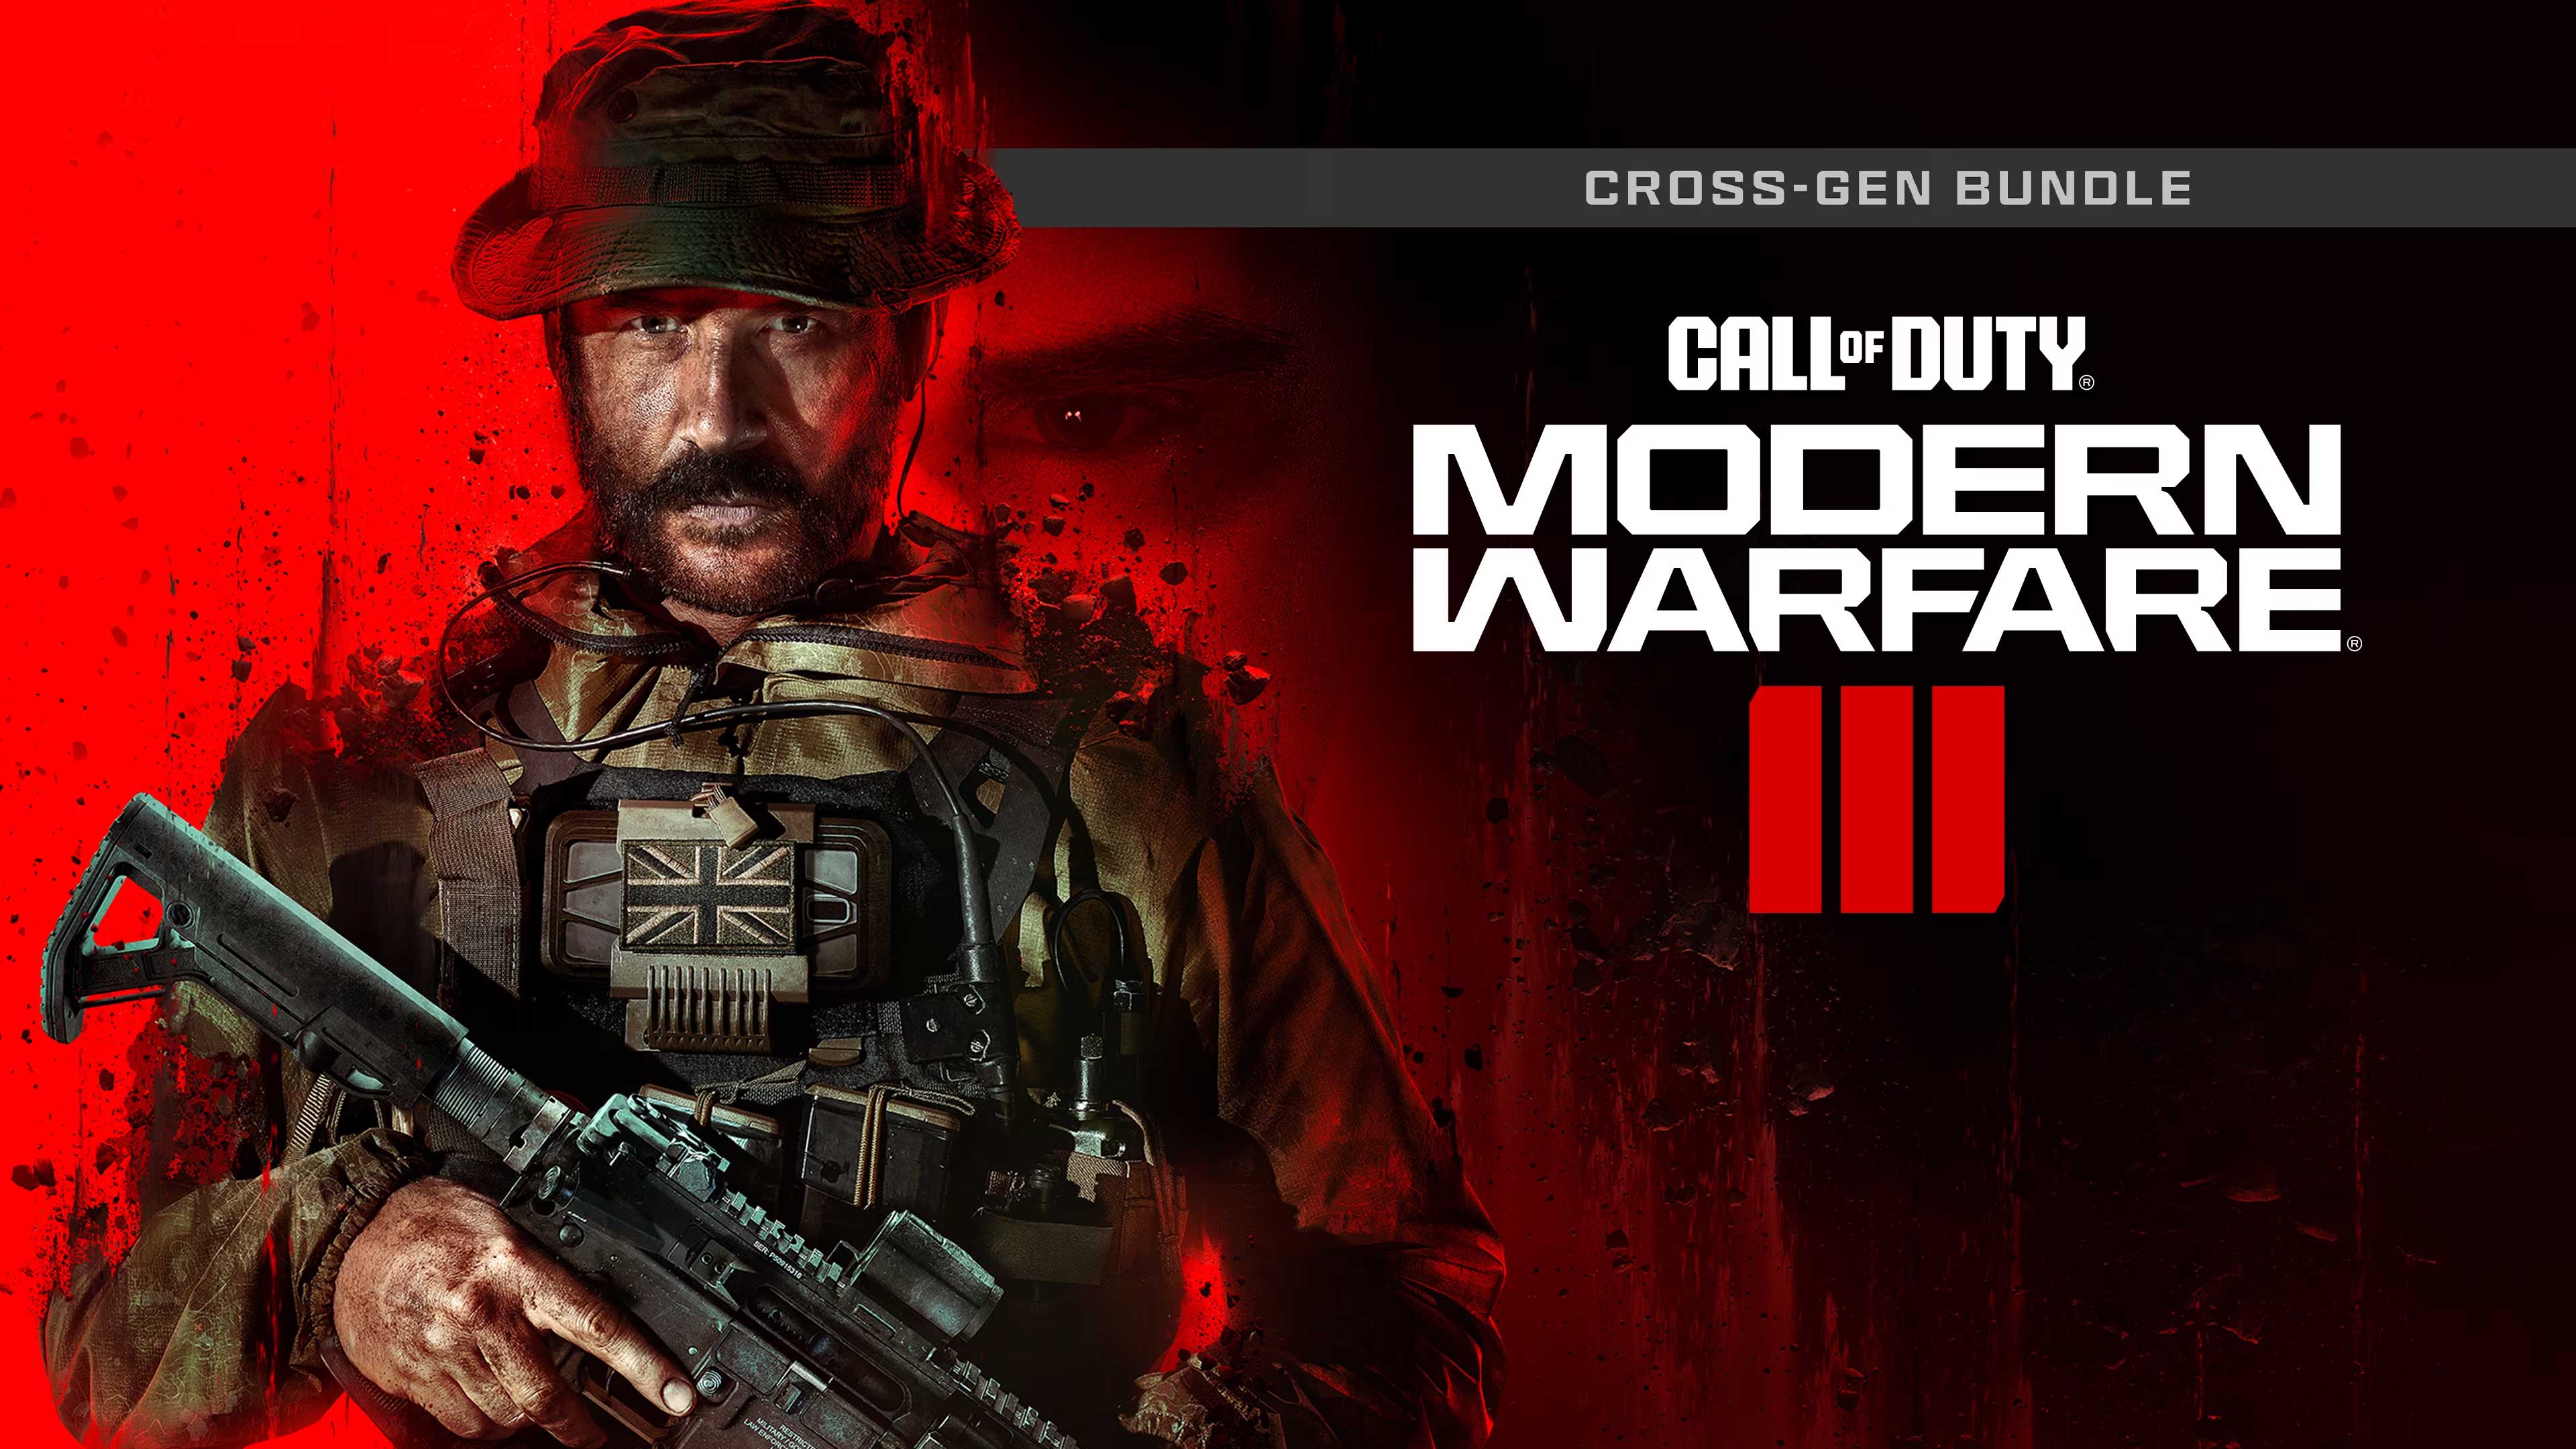 Call of Duty: Modern Warfare III - Cross-Gen Bundle, Go Surprise Them, gosurprisethem.com